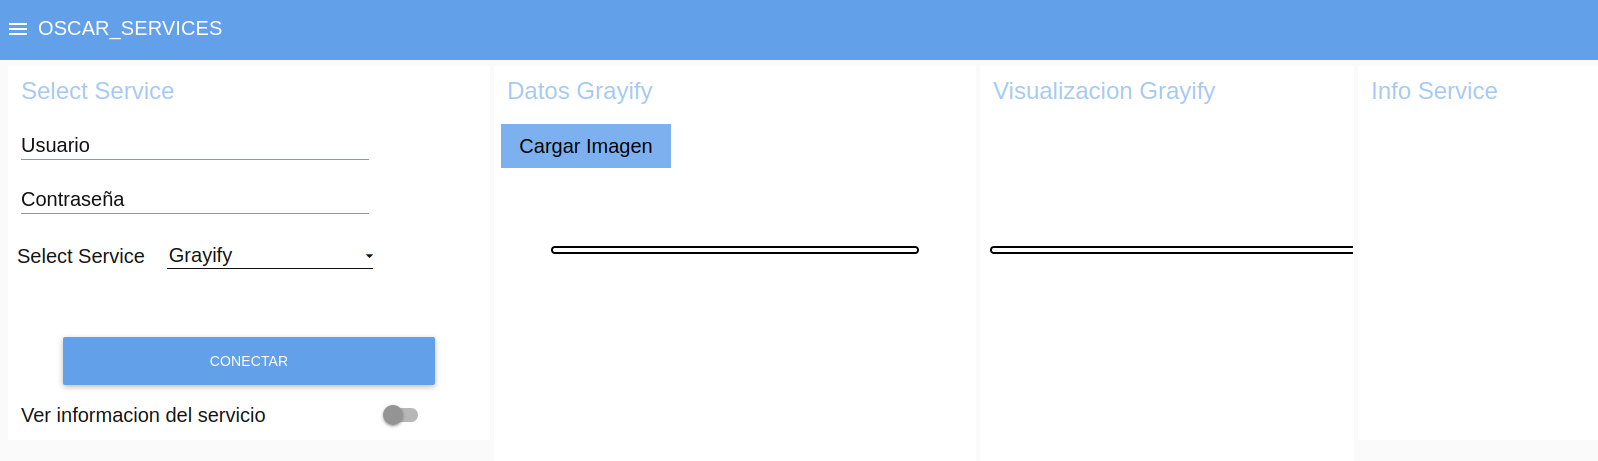 Figure 9. Dashboard interface for Grayify service.